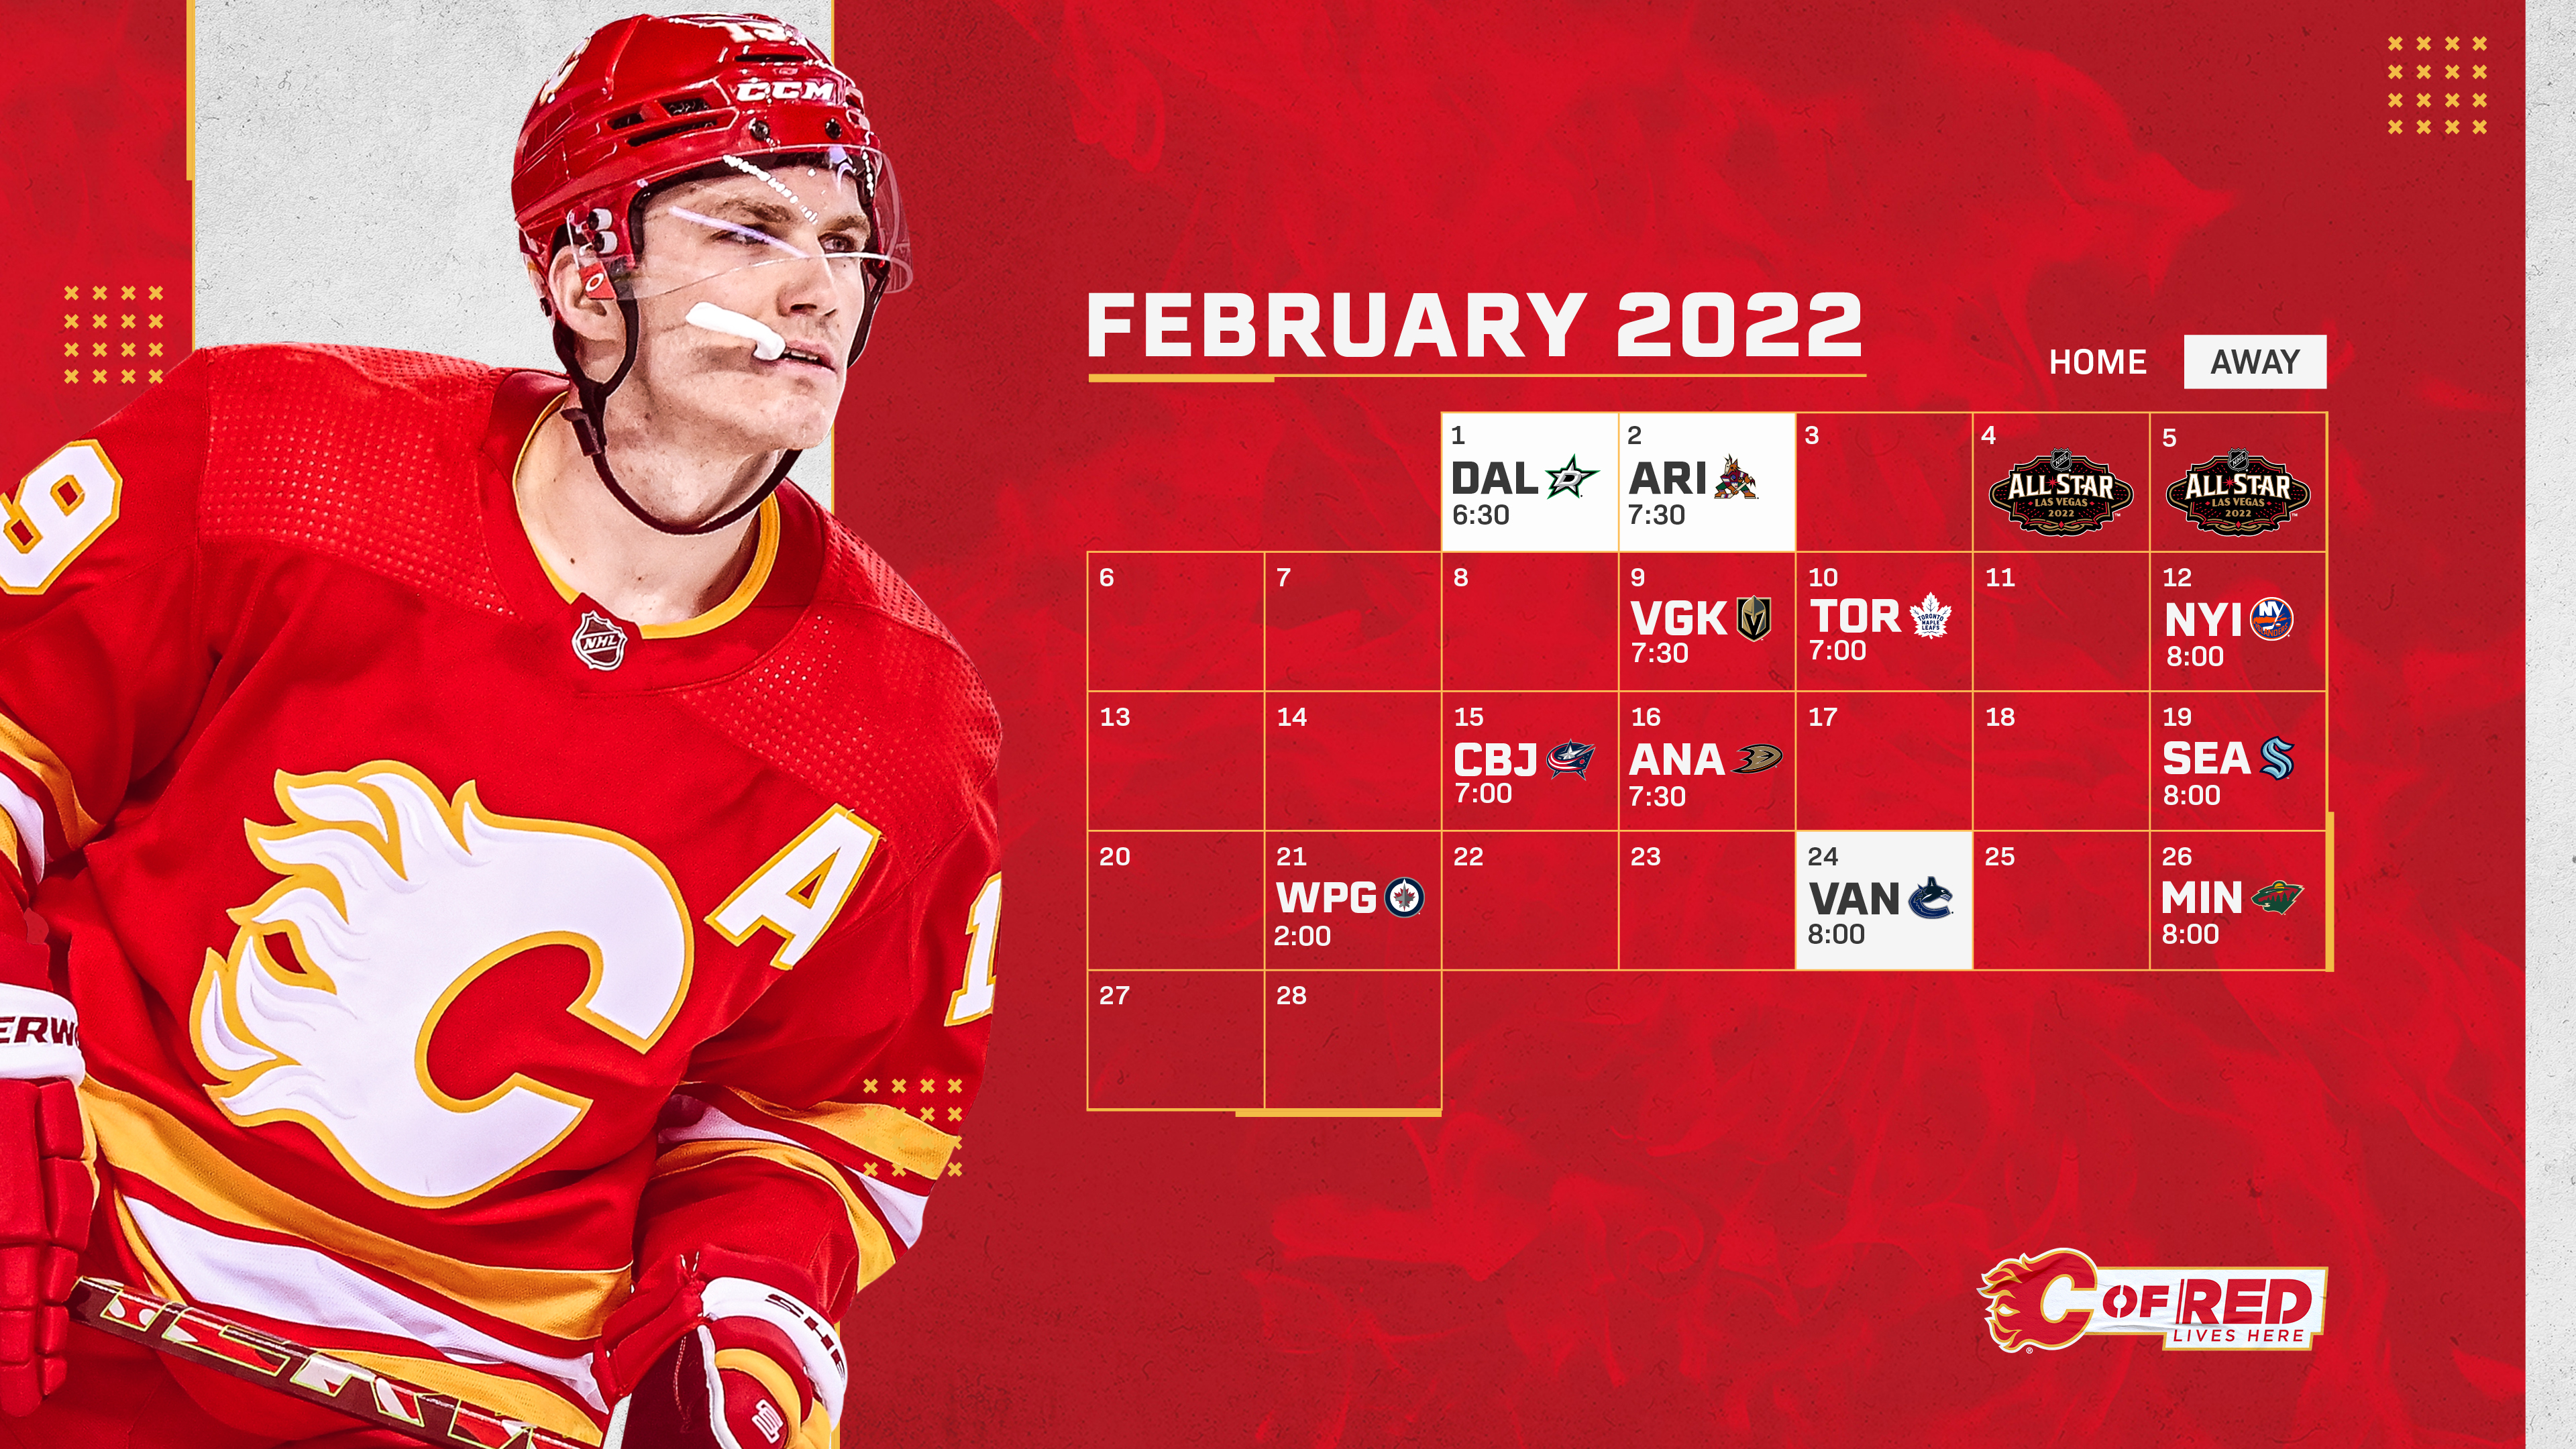 Calgary Flames 4K February schedule wallpapers for desktop and phones : r/ CalgaryFlames